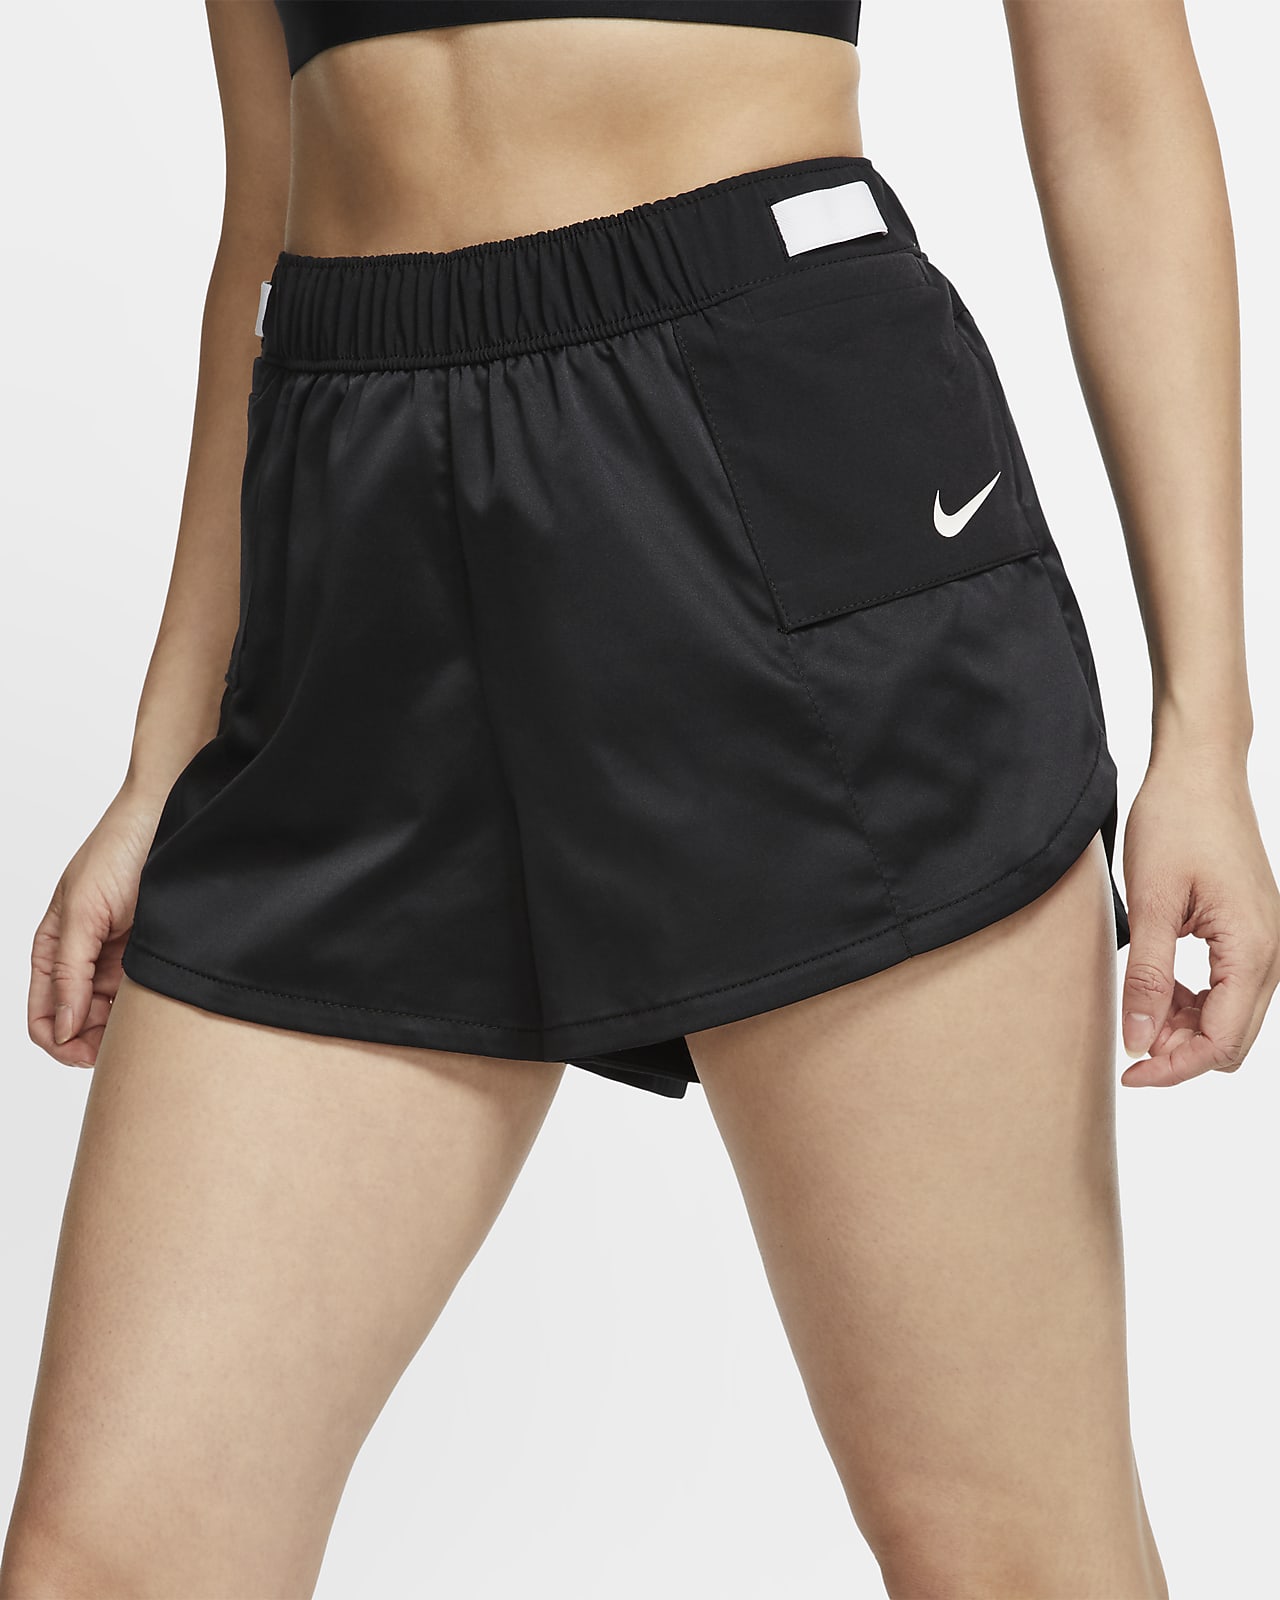 nike womans running shorts